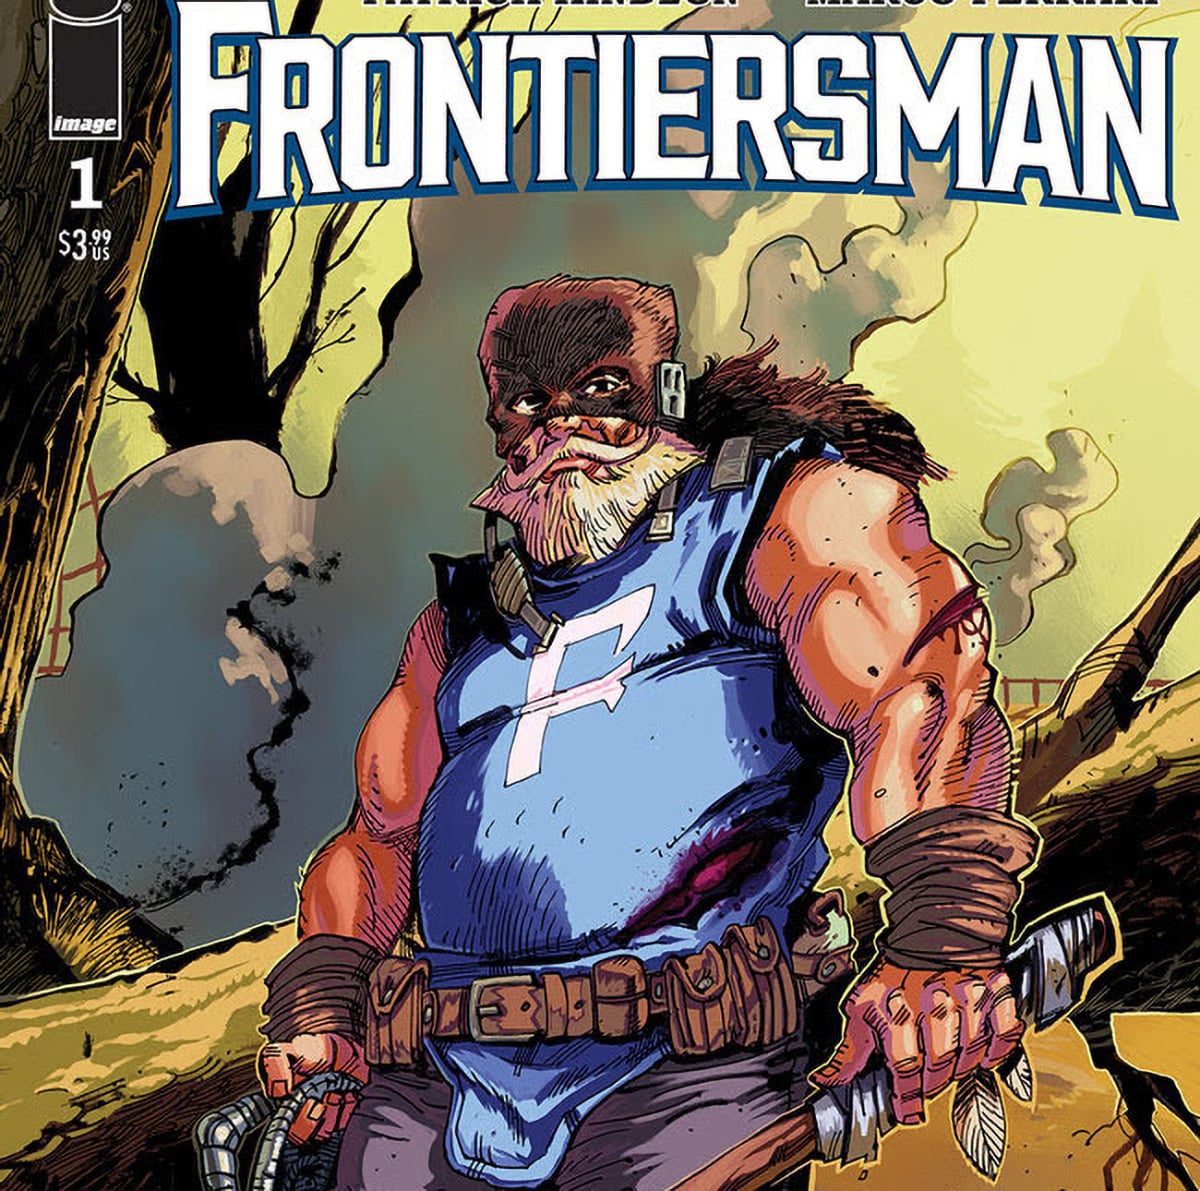 Image launching new superhero adventure 'Frontiersman'